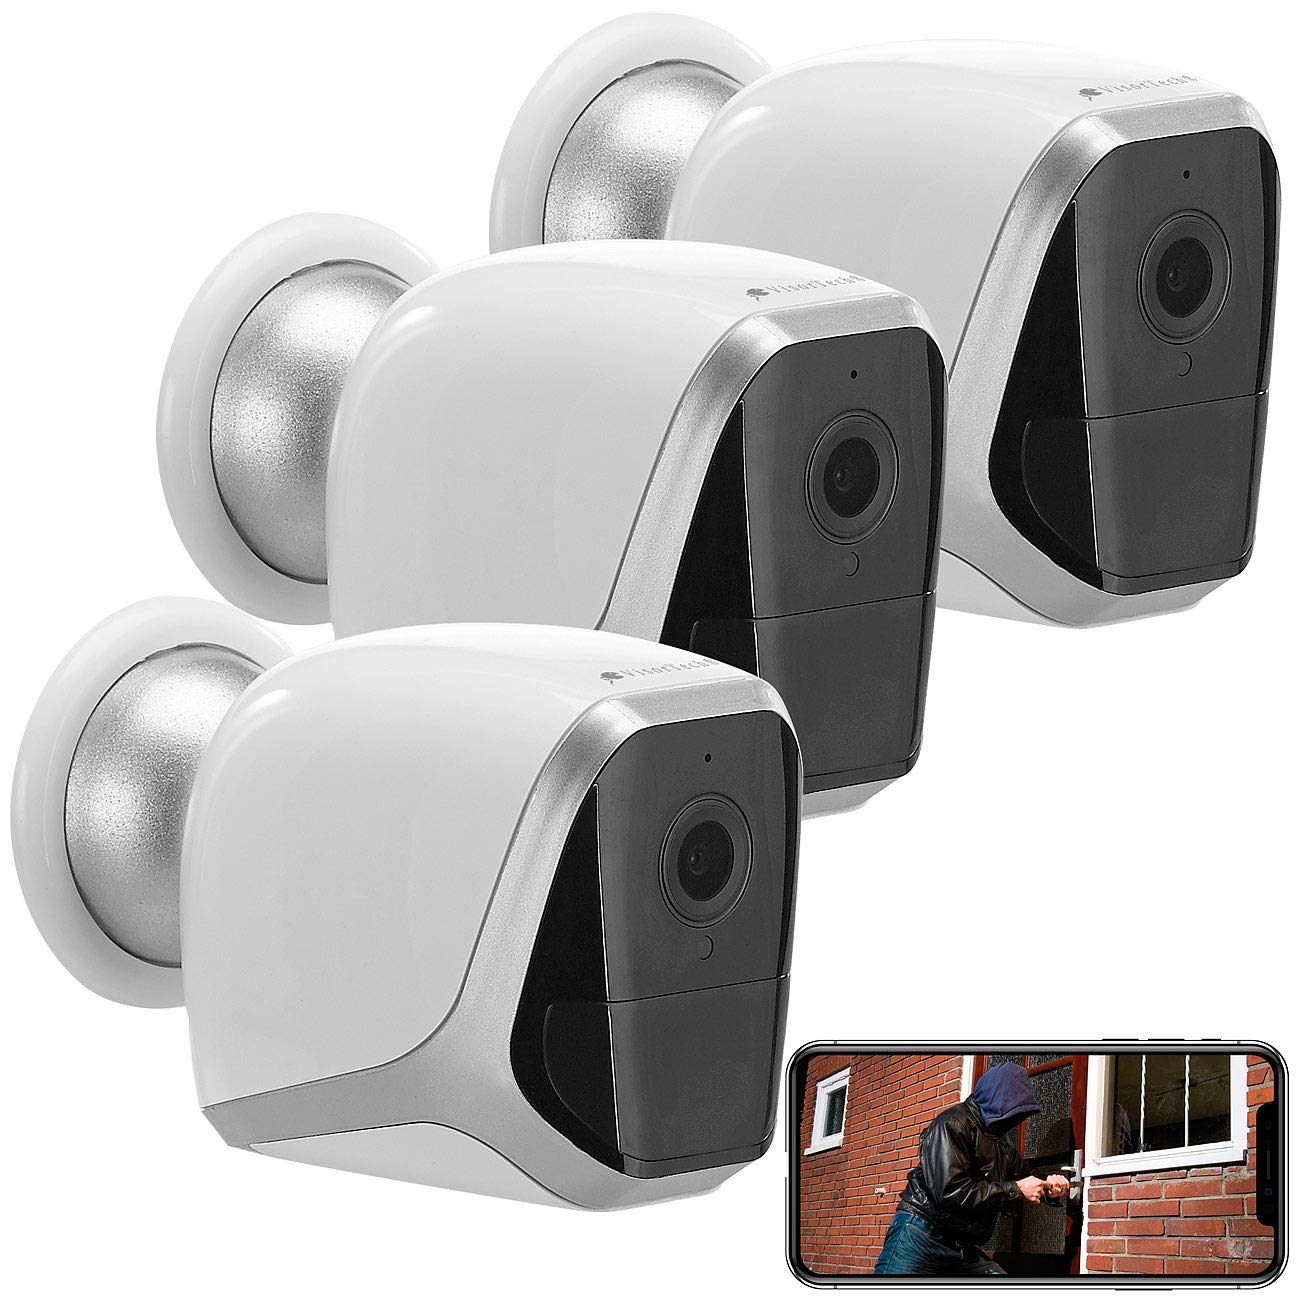 VisorTech Überwachung Kamera: 3er-Set 2K-WLAN-IP-Kamera mit Akku, App, 1 Jahr Stand-by, 3 MP, IP65 (Überwachungskamera mit Akku, 2K Überwachungskamera, Funk Bewegungsmelder)